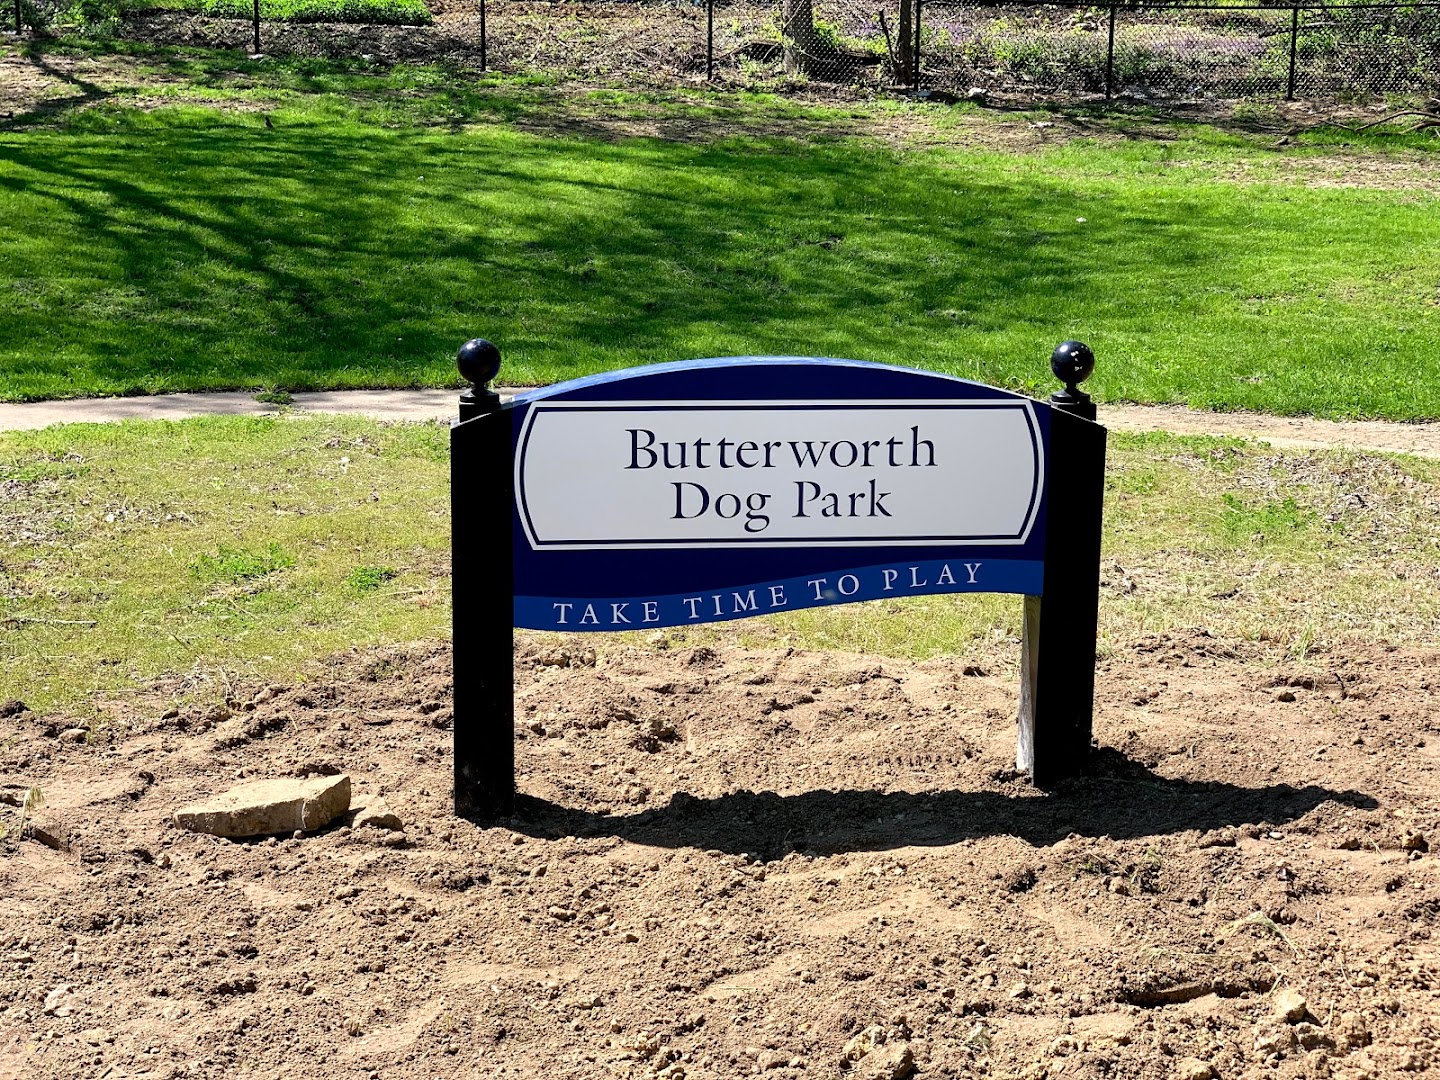 Butterworth Dog Park